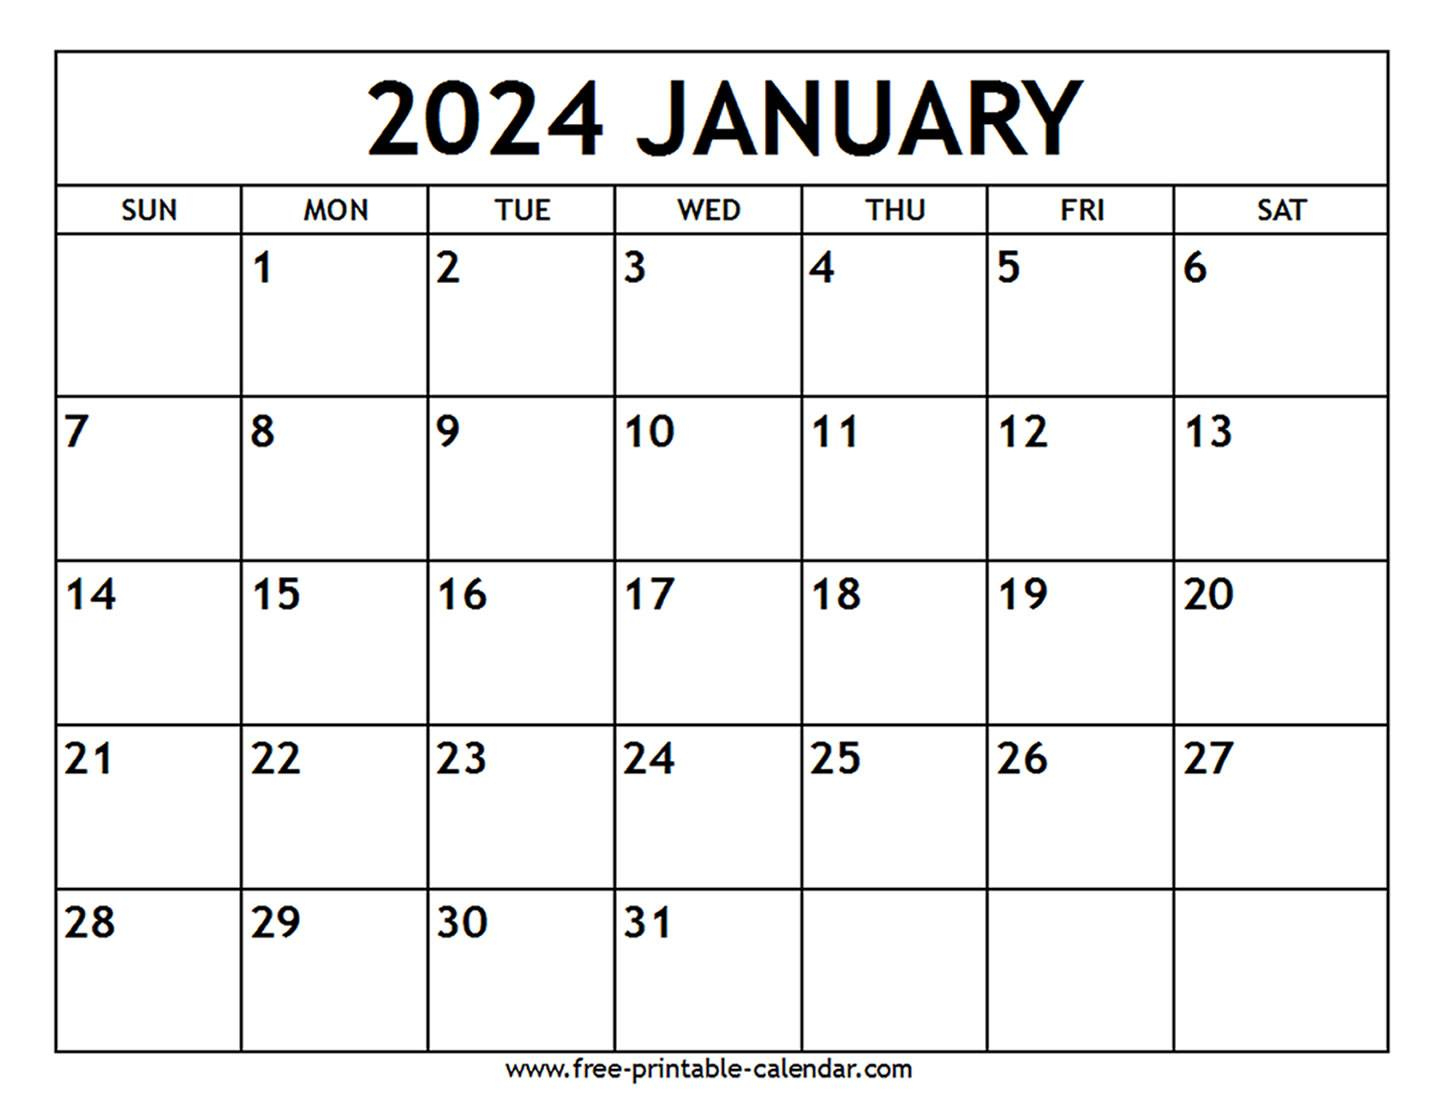 January 2024 Calendar - Free-Printable-Calendar | January Free Printable Calendar 2024